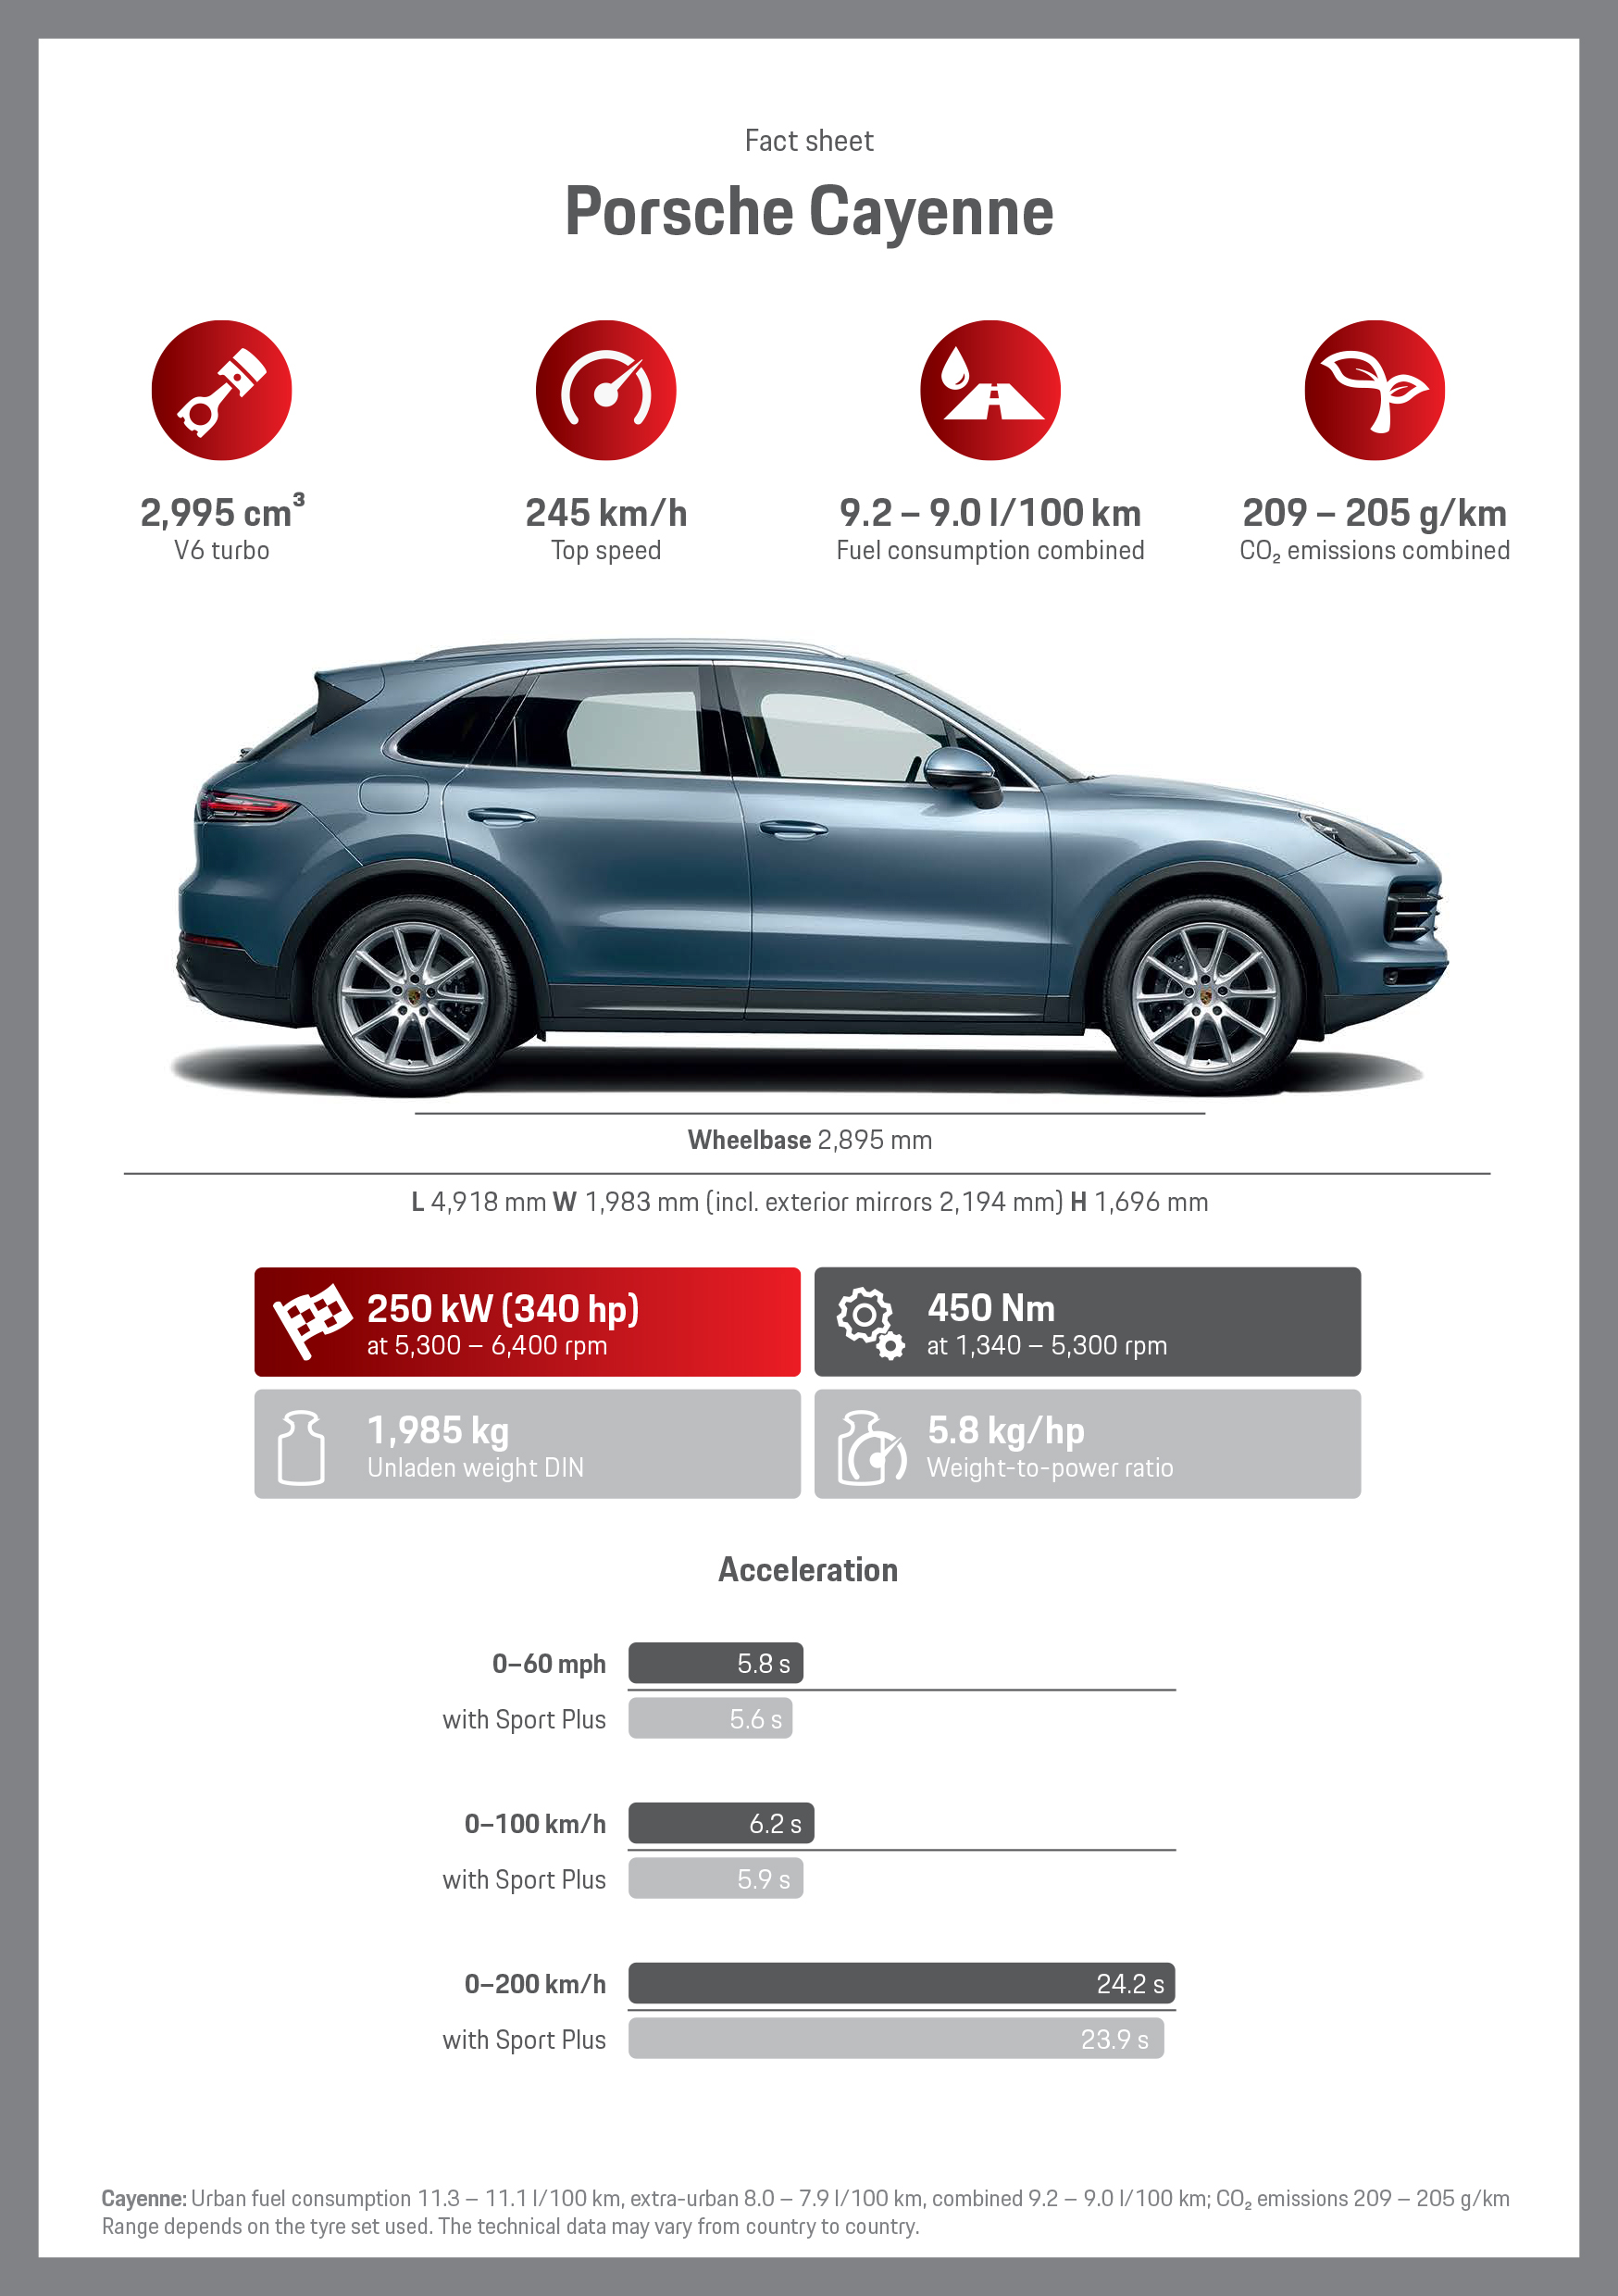 Cayenne S, Infographic, 2017, Porsche AG